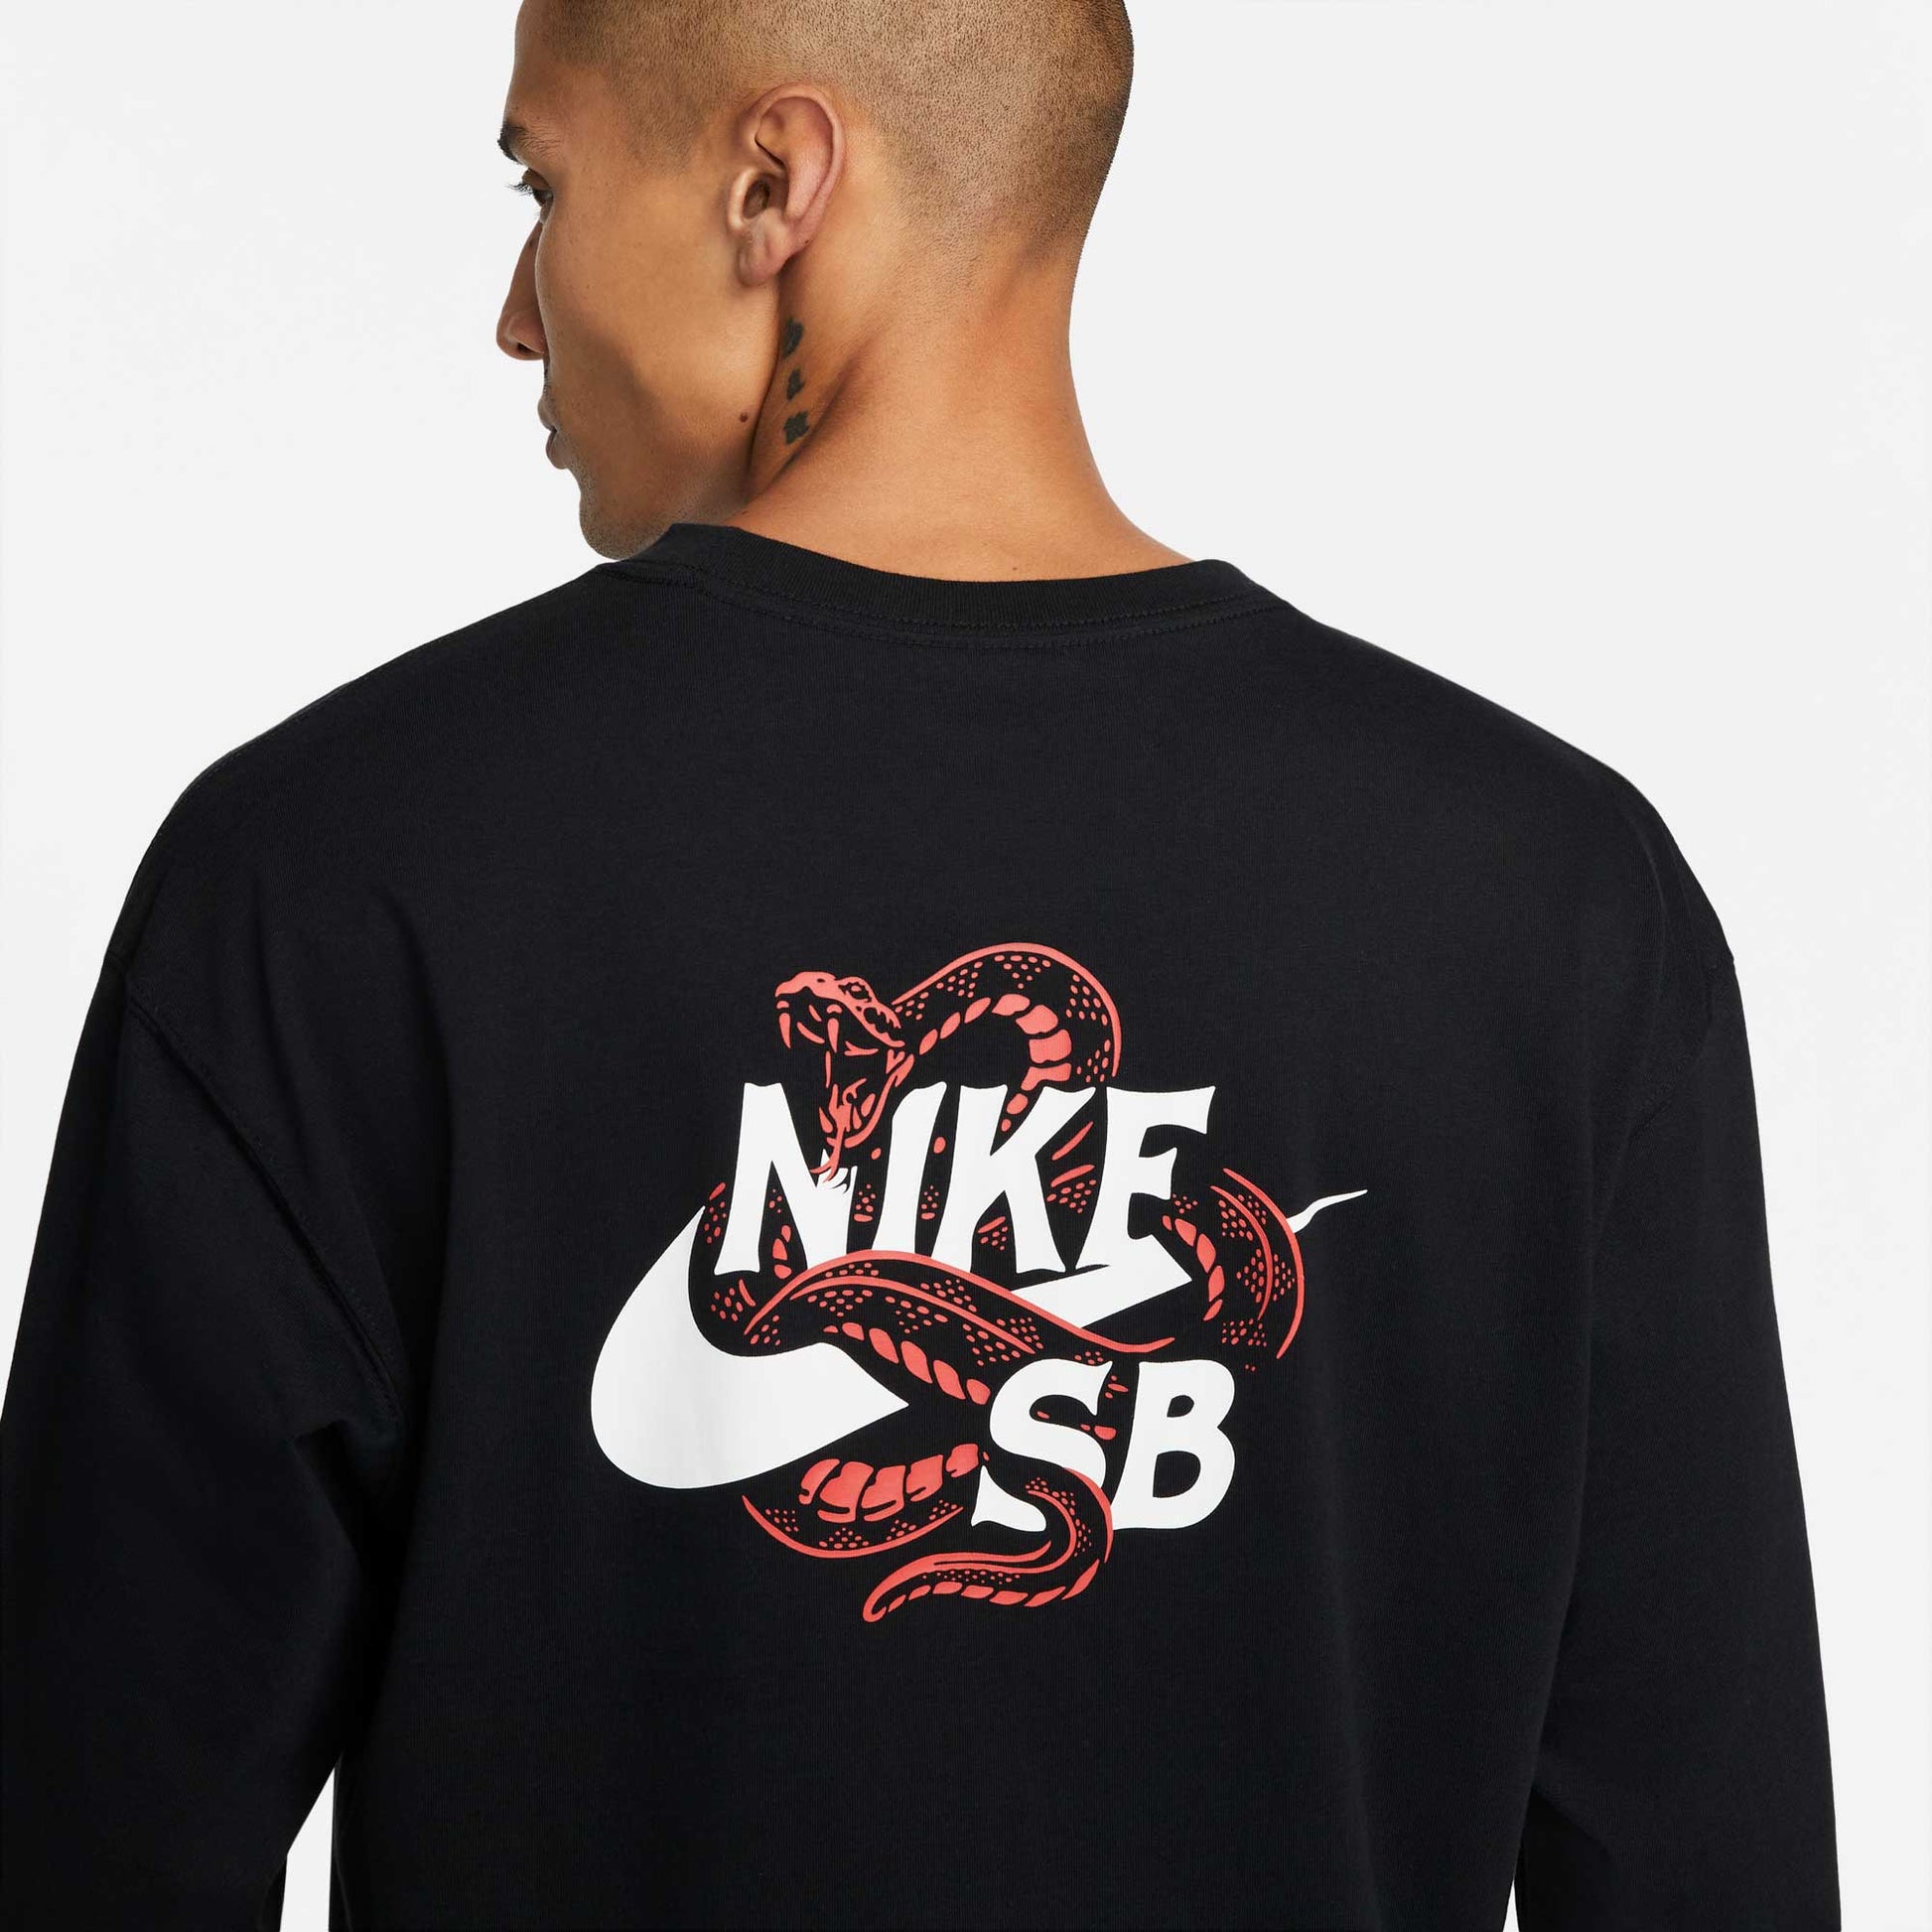 Nike SB Snake long sleeve tee, black - Tiki Room Skateboards - 1